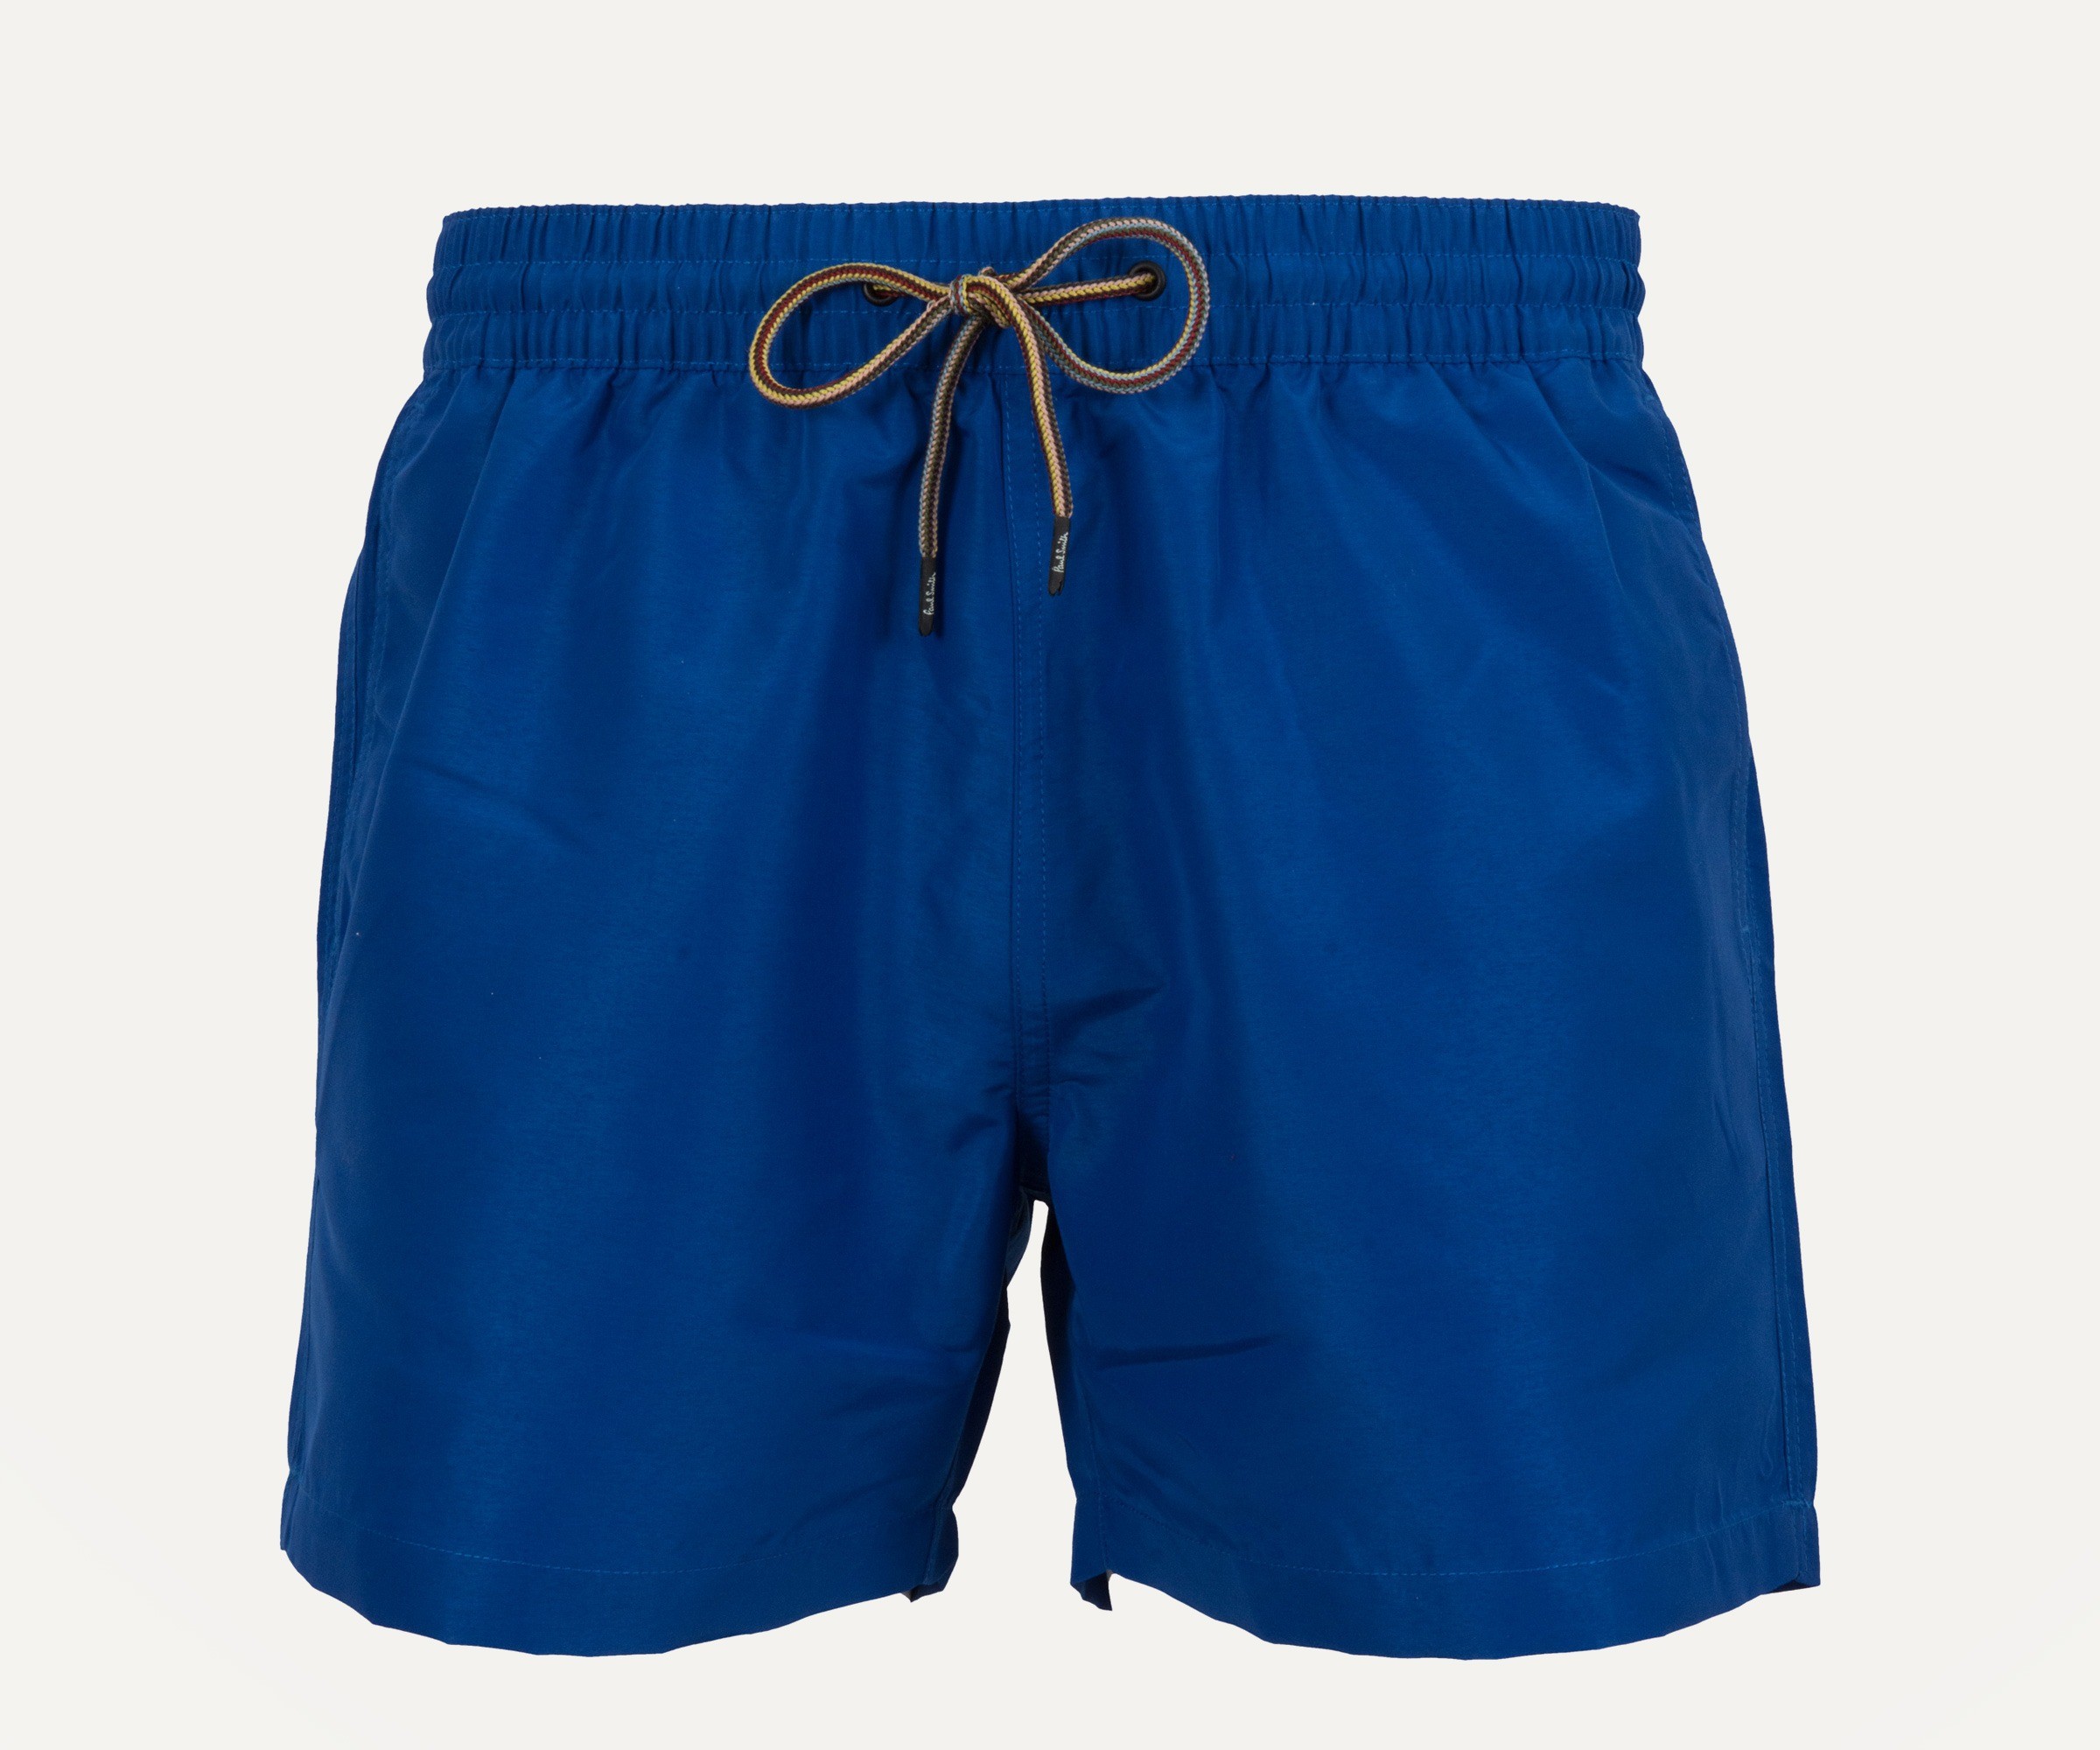 Paul Smith Swimwear Classic Regular Length Swim Shorts Royal Blue